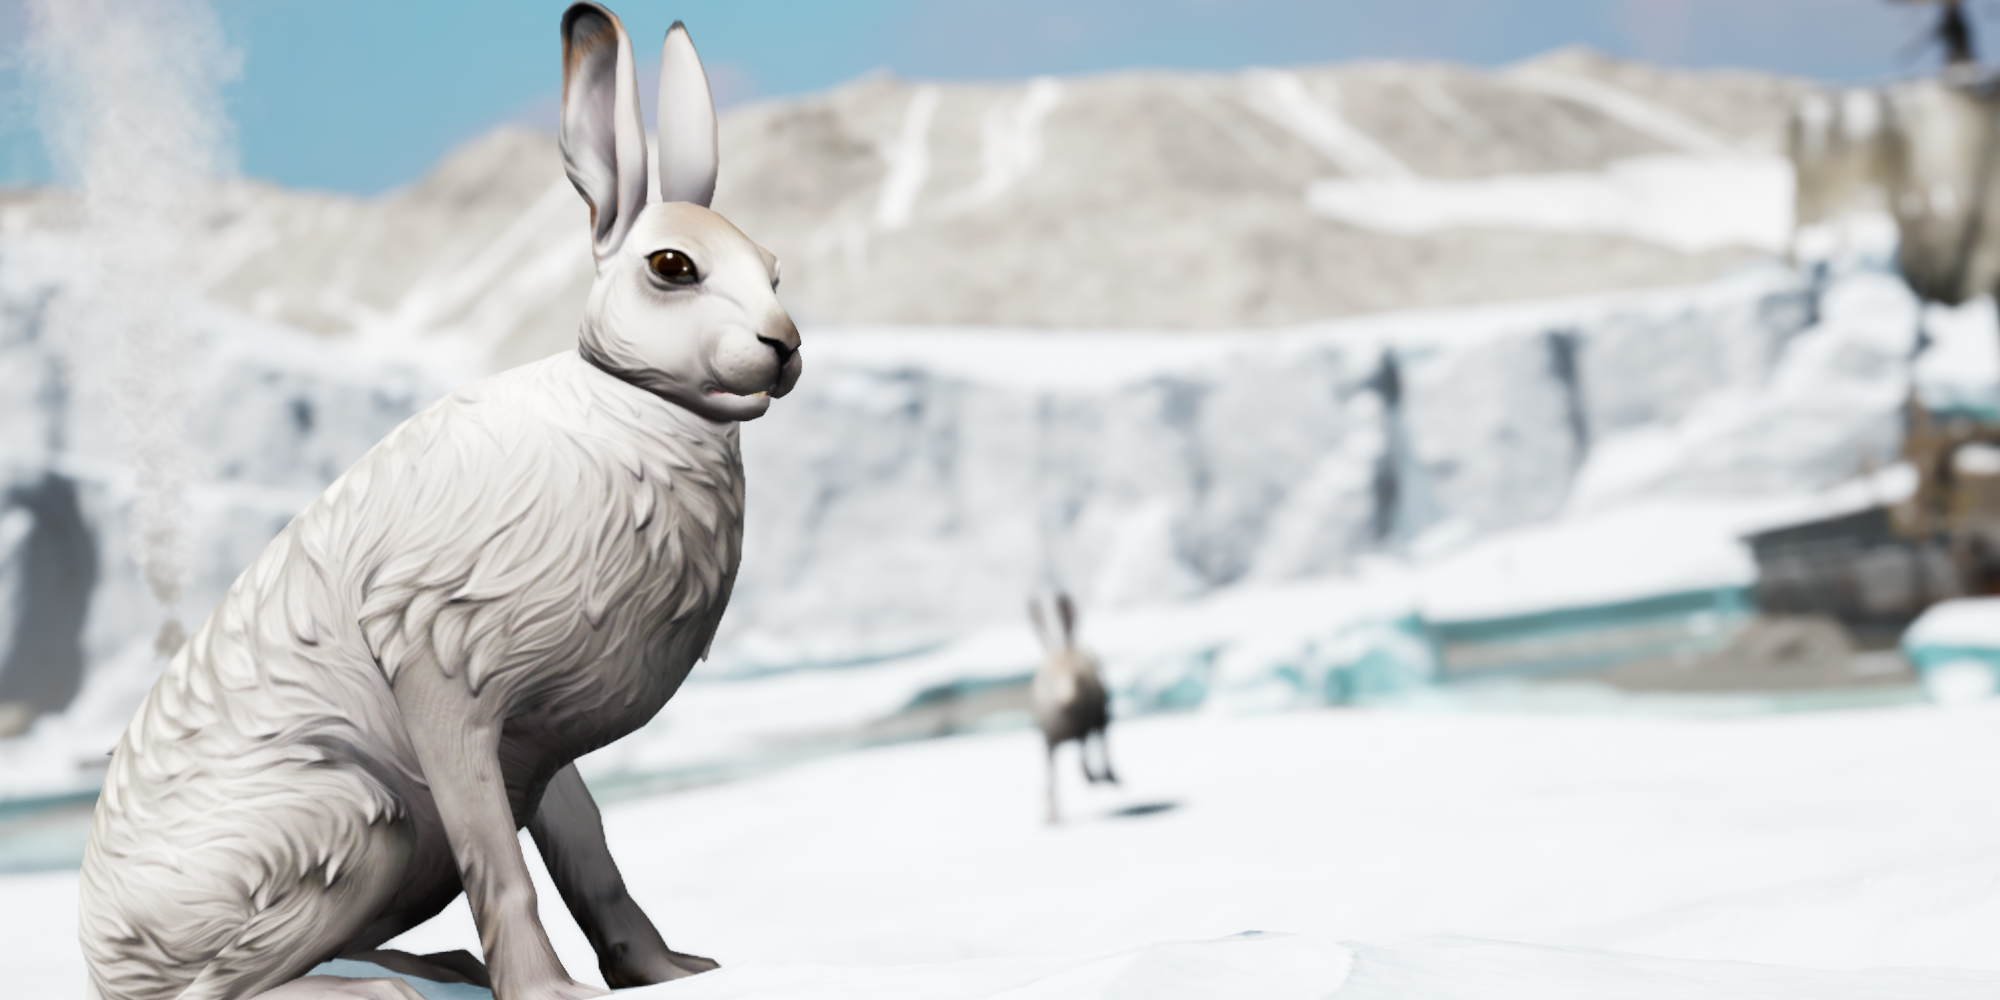 Dread Hunger Vegetarian Achievement showing rabbit on a snowy landscape